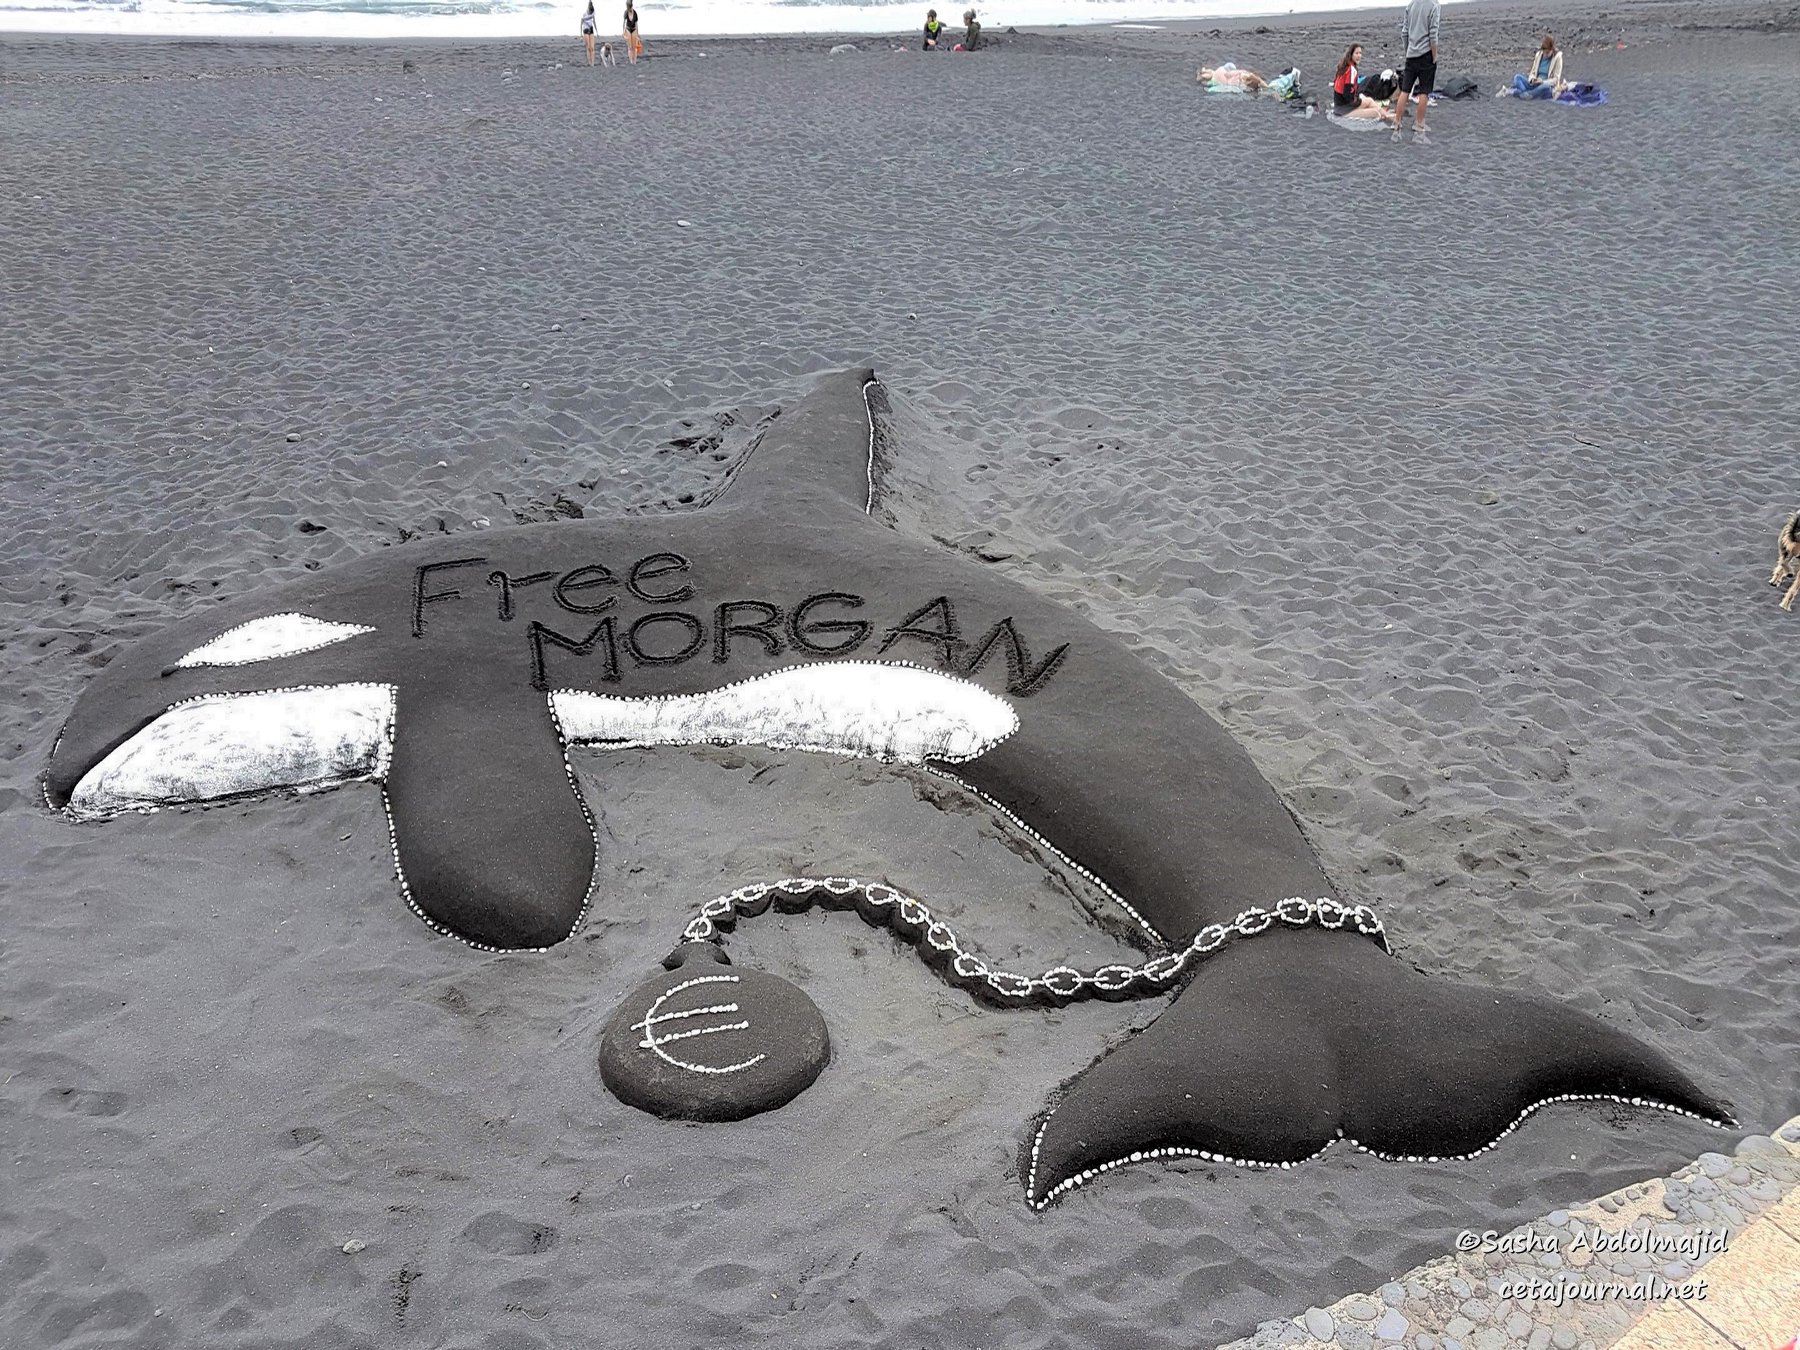 Orca sand sculpture (c) Sasha Abdolmajid